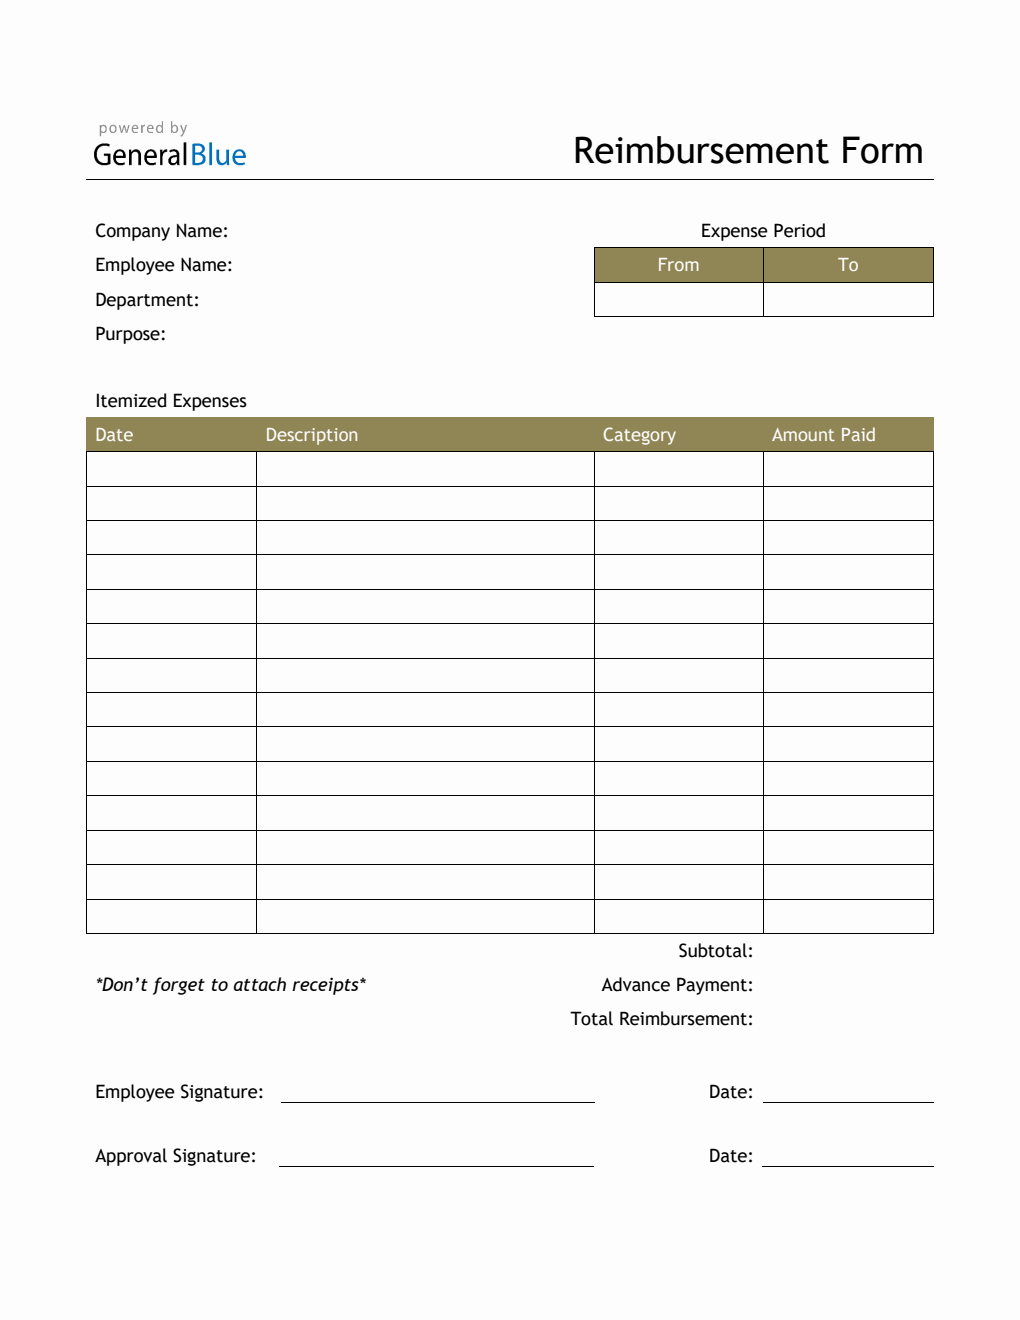 Reimbursement Form in PDF (Basic)